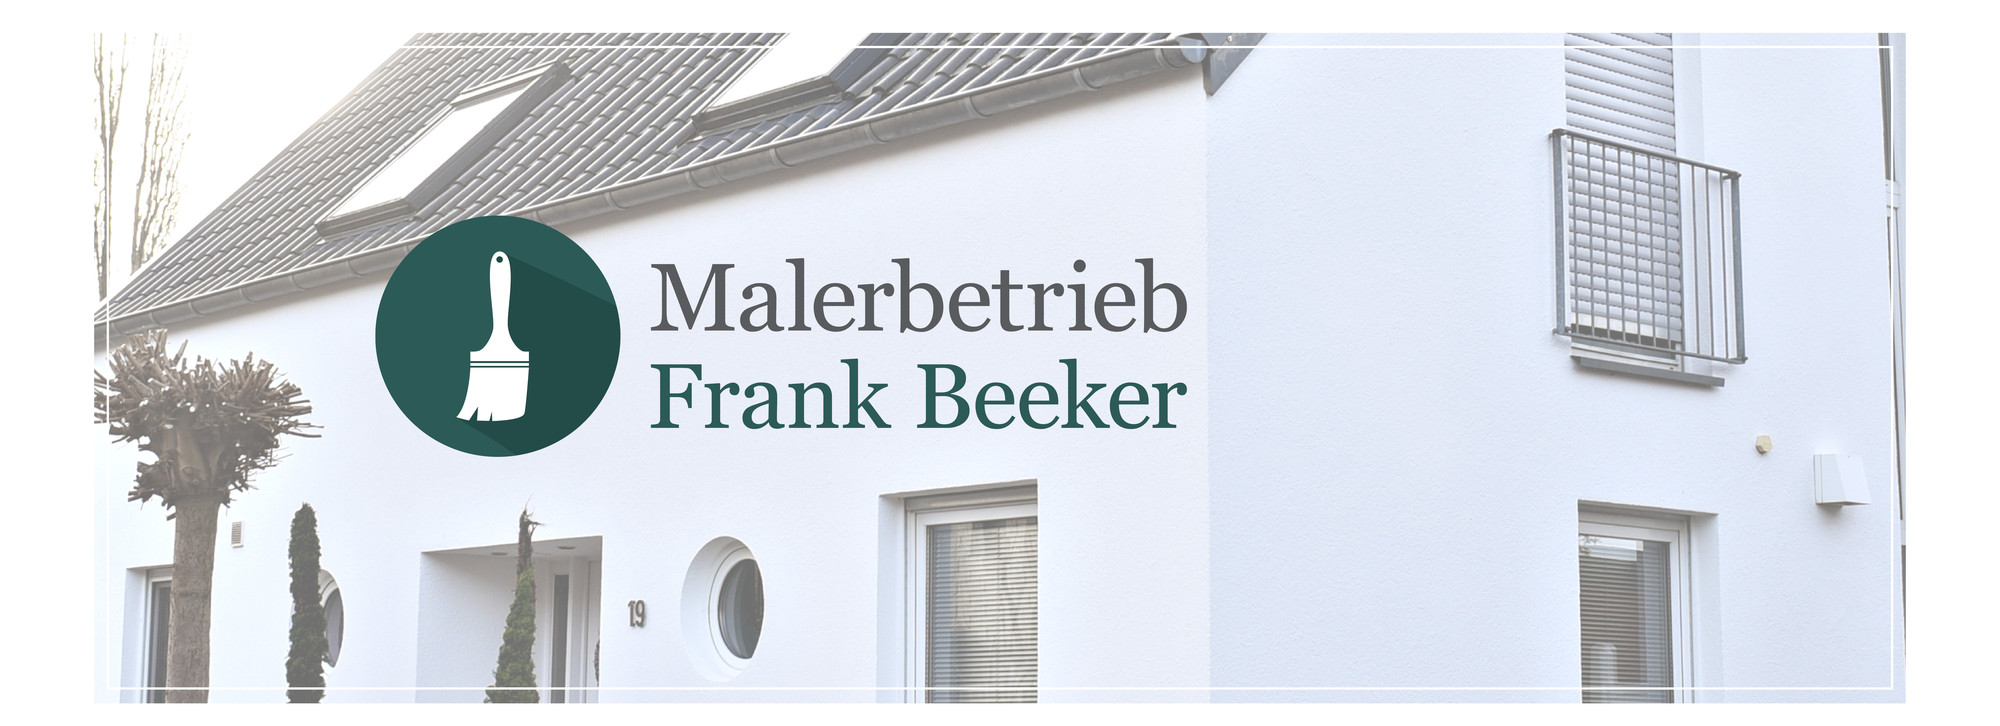 Malerbetrieb Frank Beeker